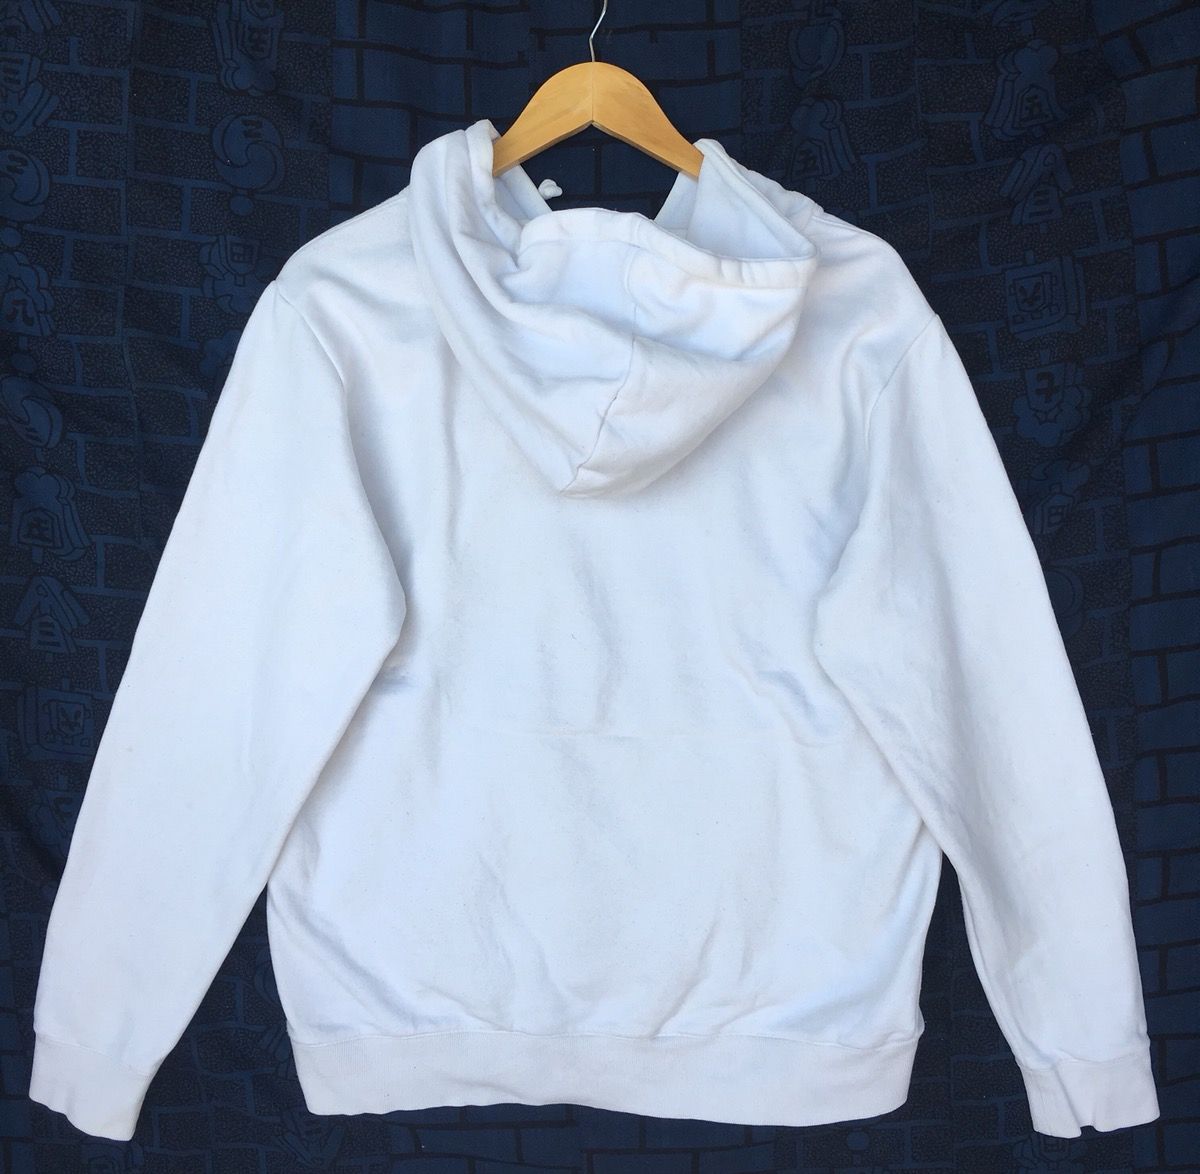 Japanese Brand Feltics Sweatshirt Hoodie Size US M / EU 48-50 / 2 - 4 Thumbnail